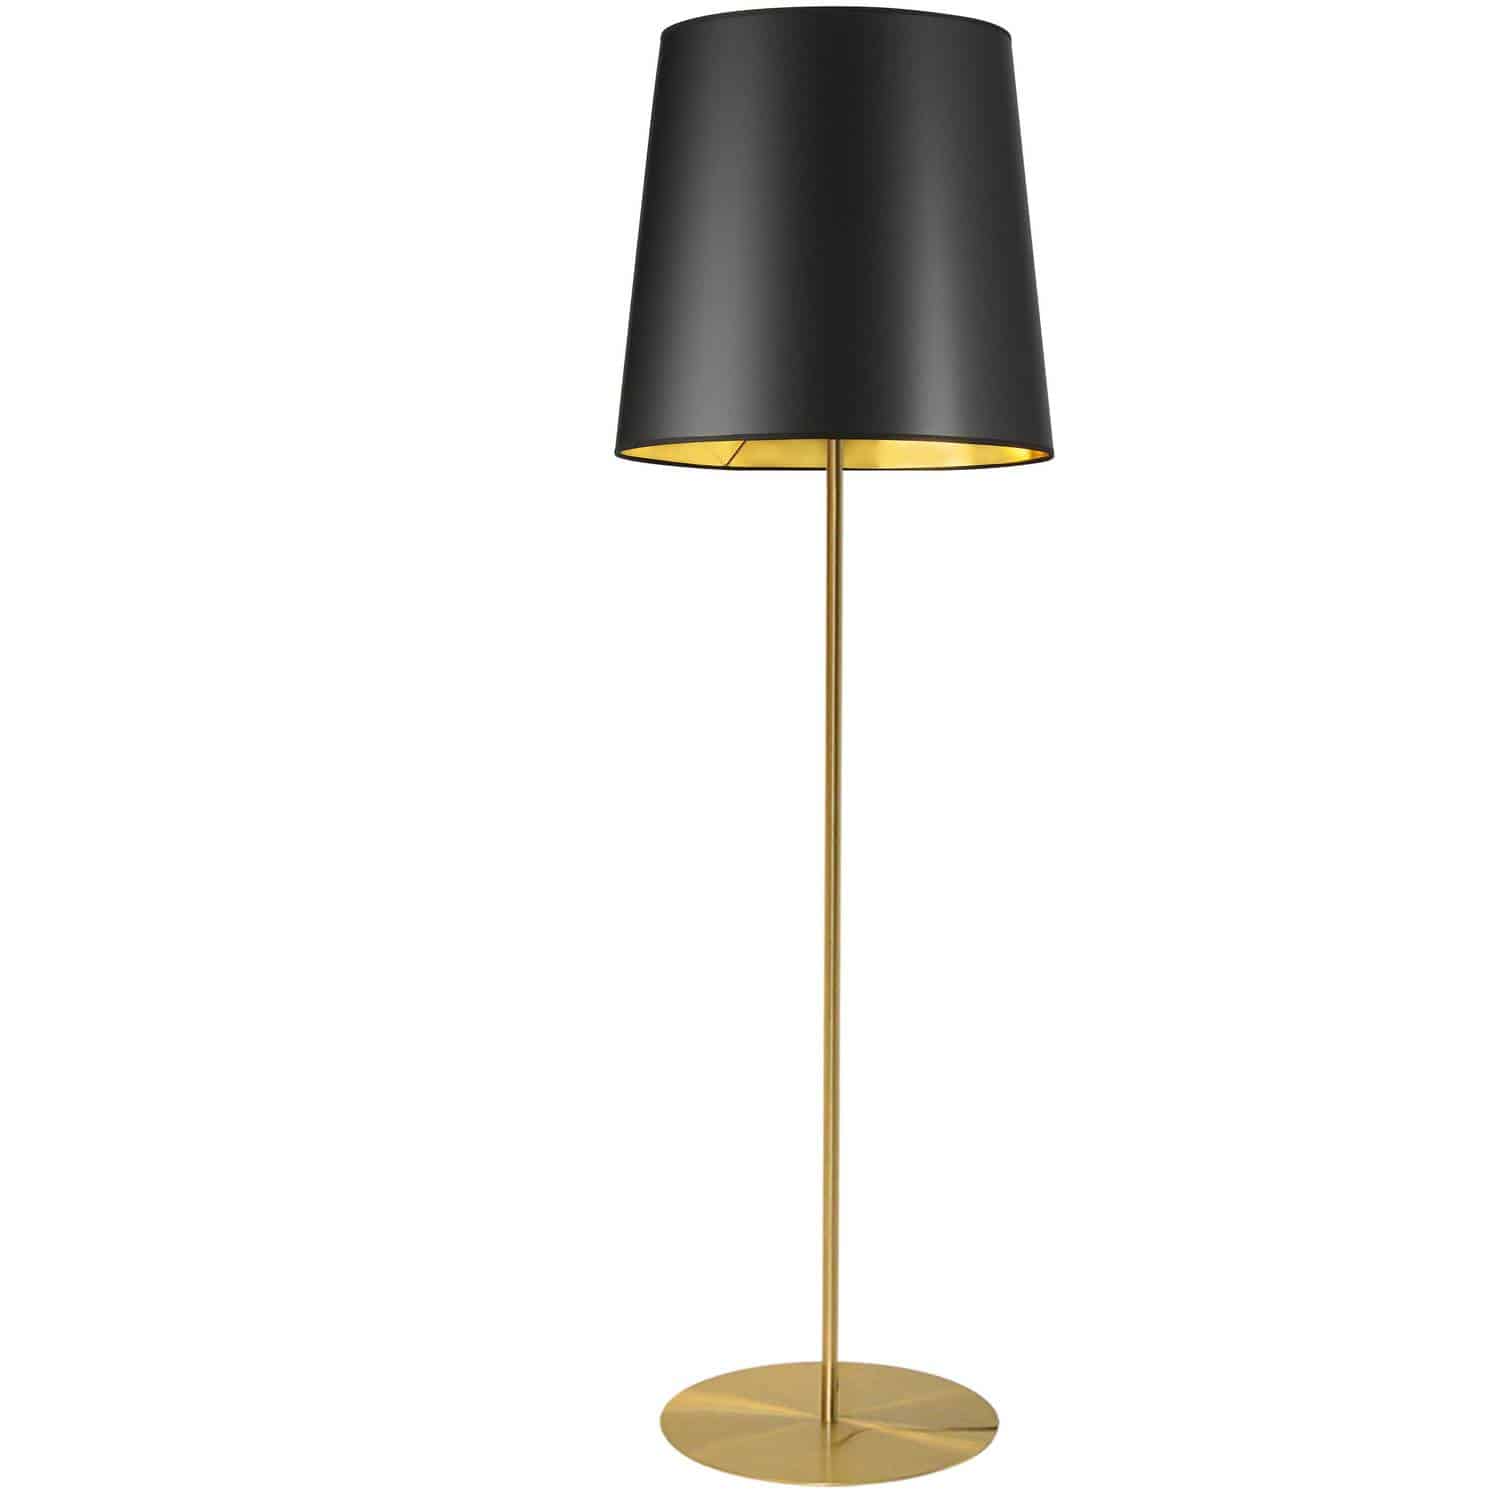 1 Light Aged Brass Floor Lamp w/ Black/Gold Drum Shade